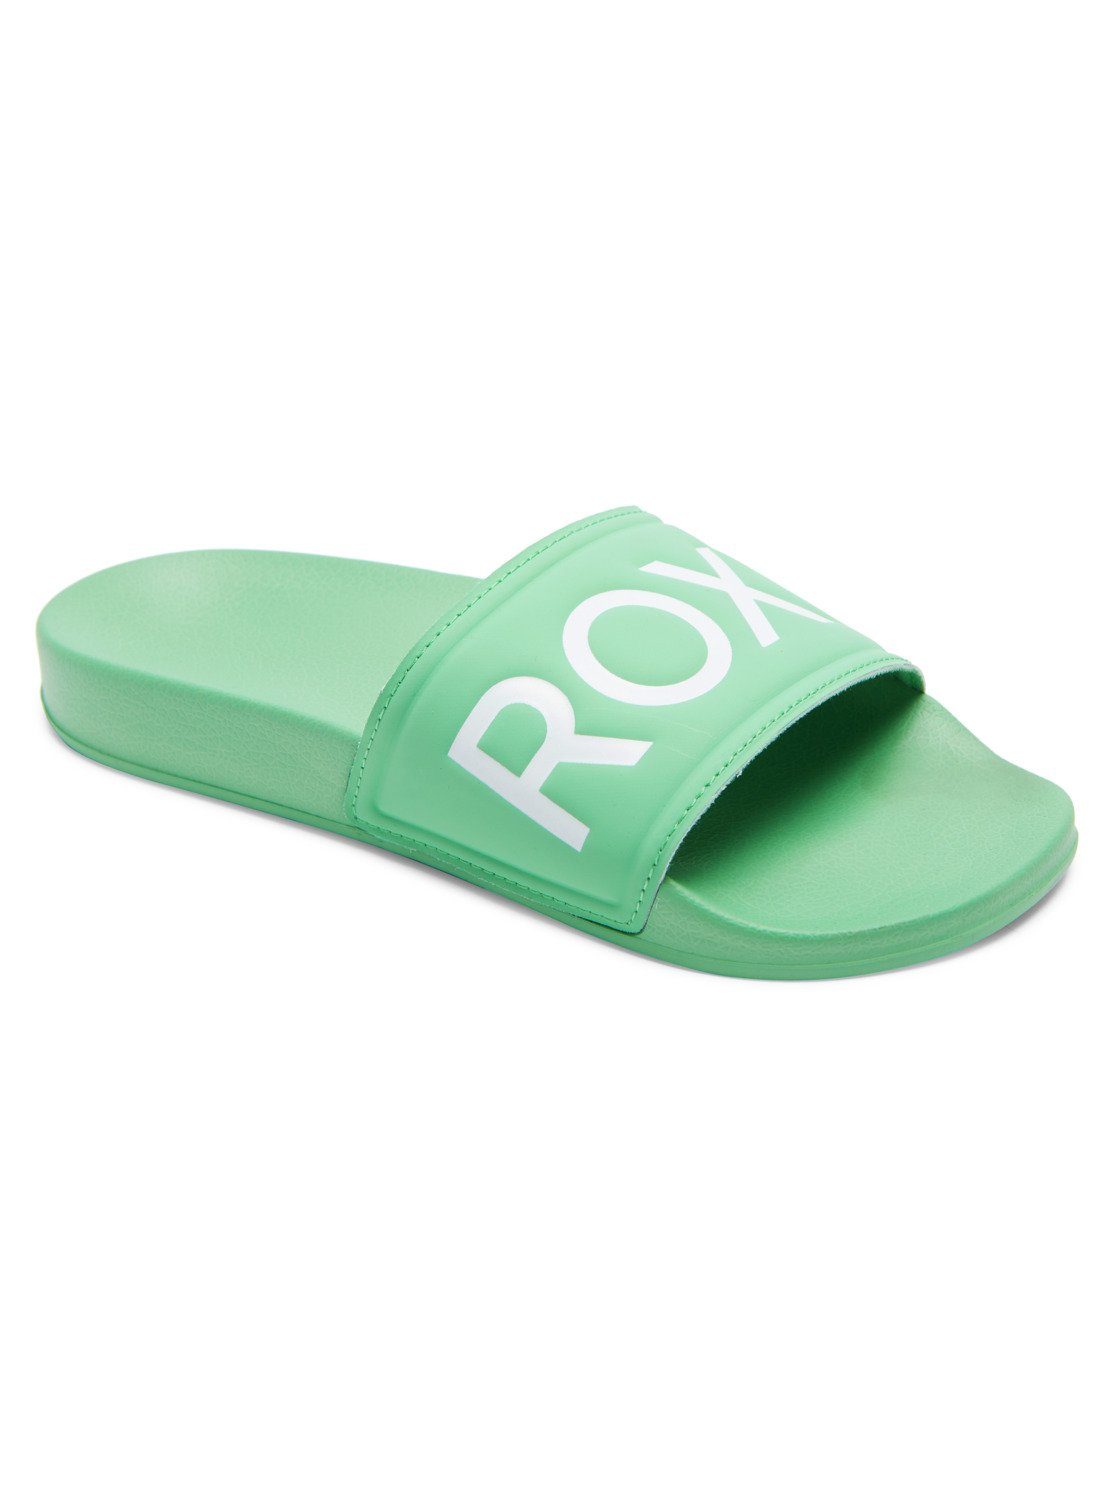 Roxy Slippy Sandale Absinthe Green